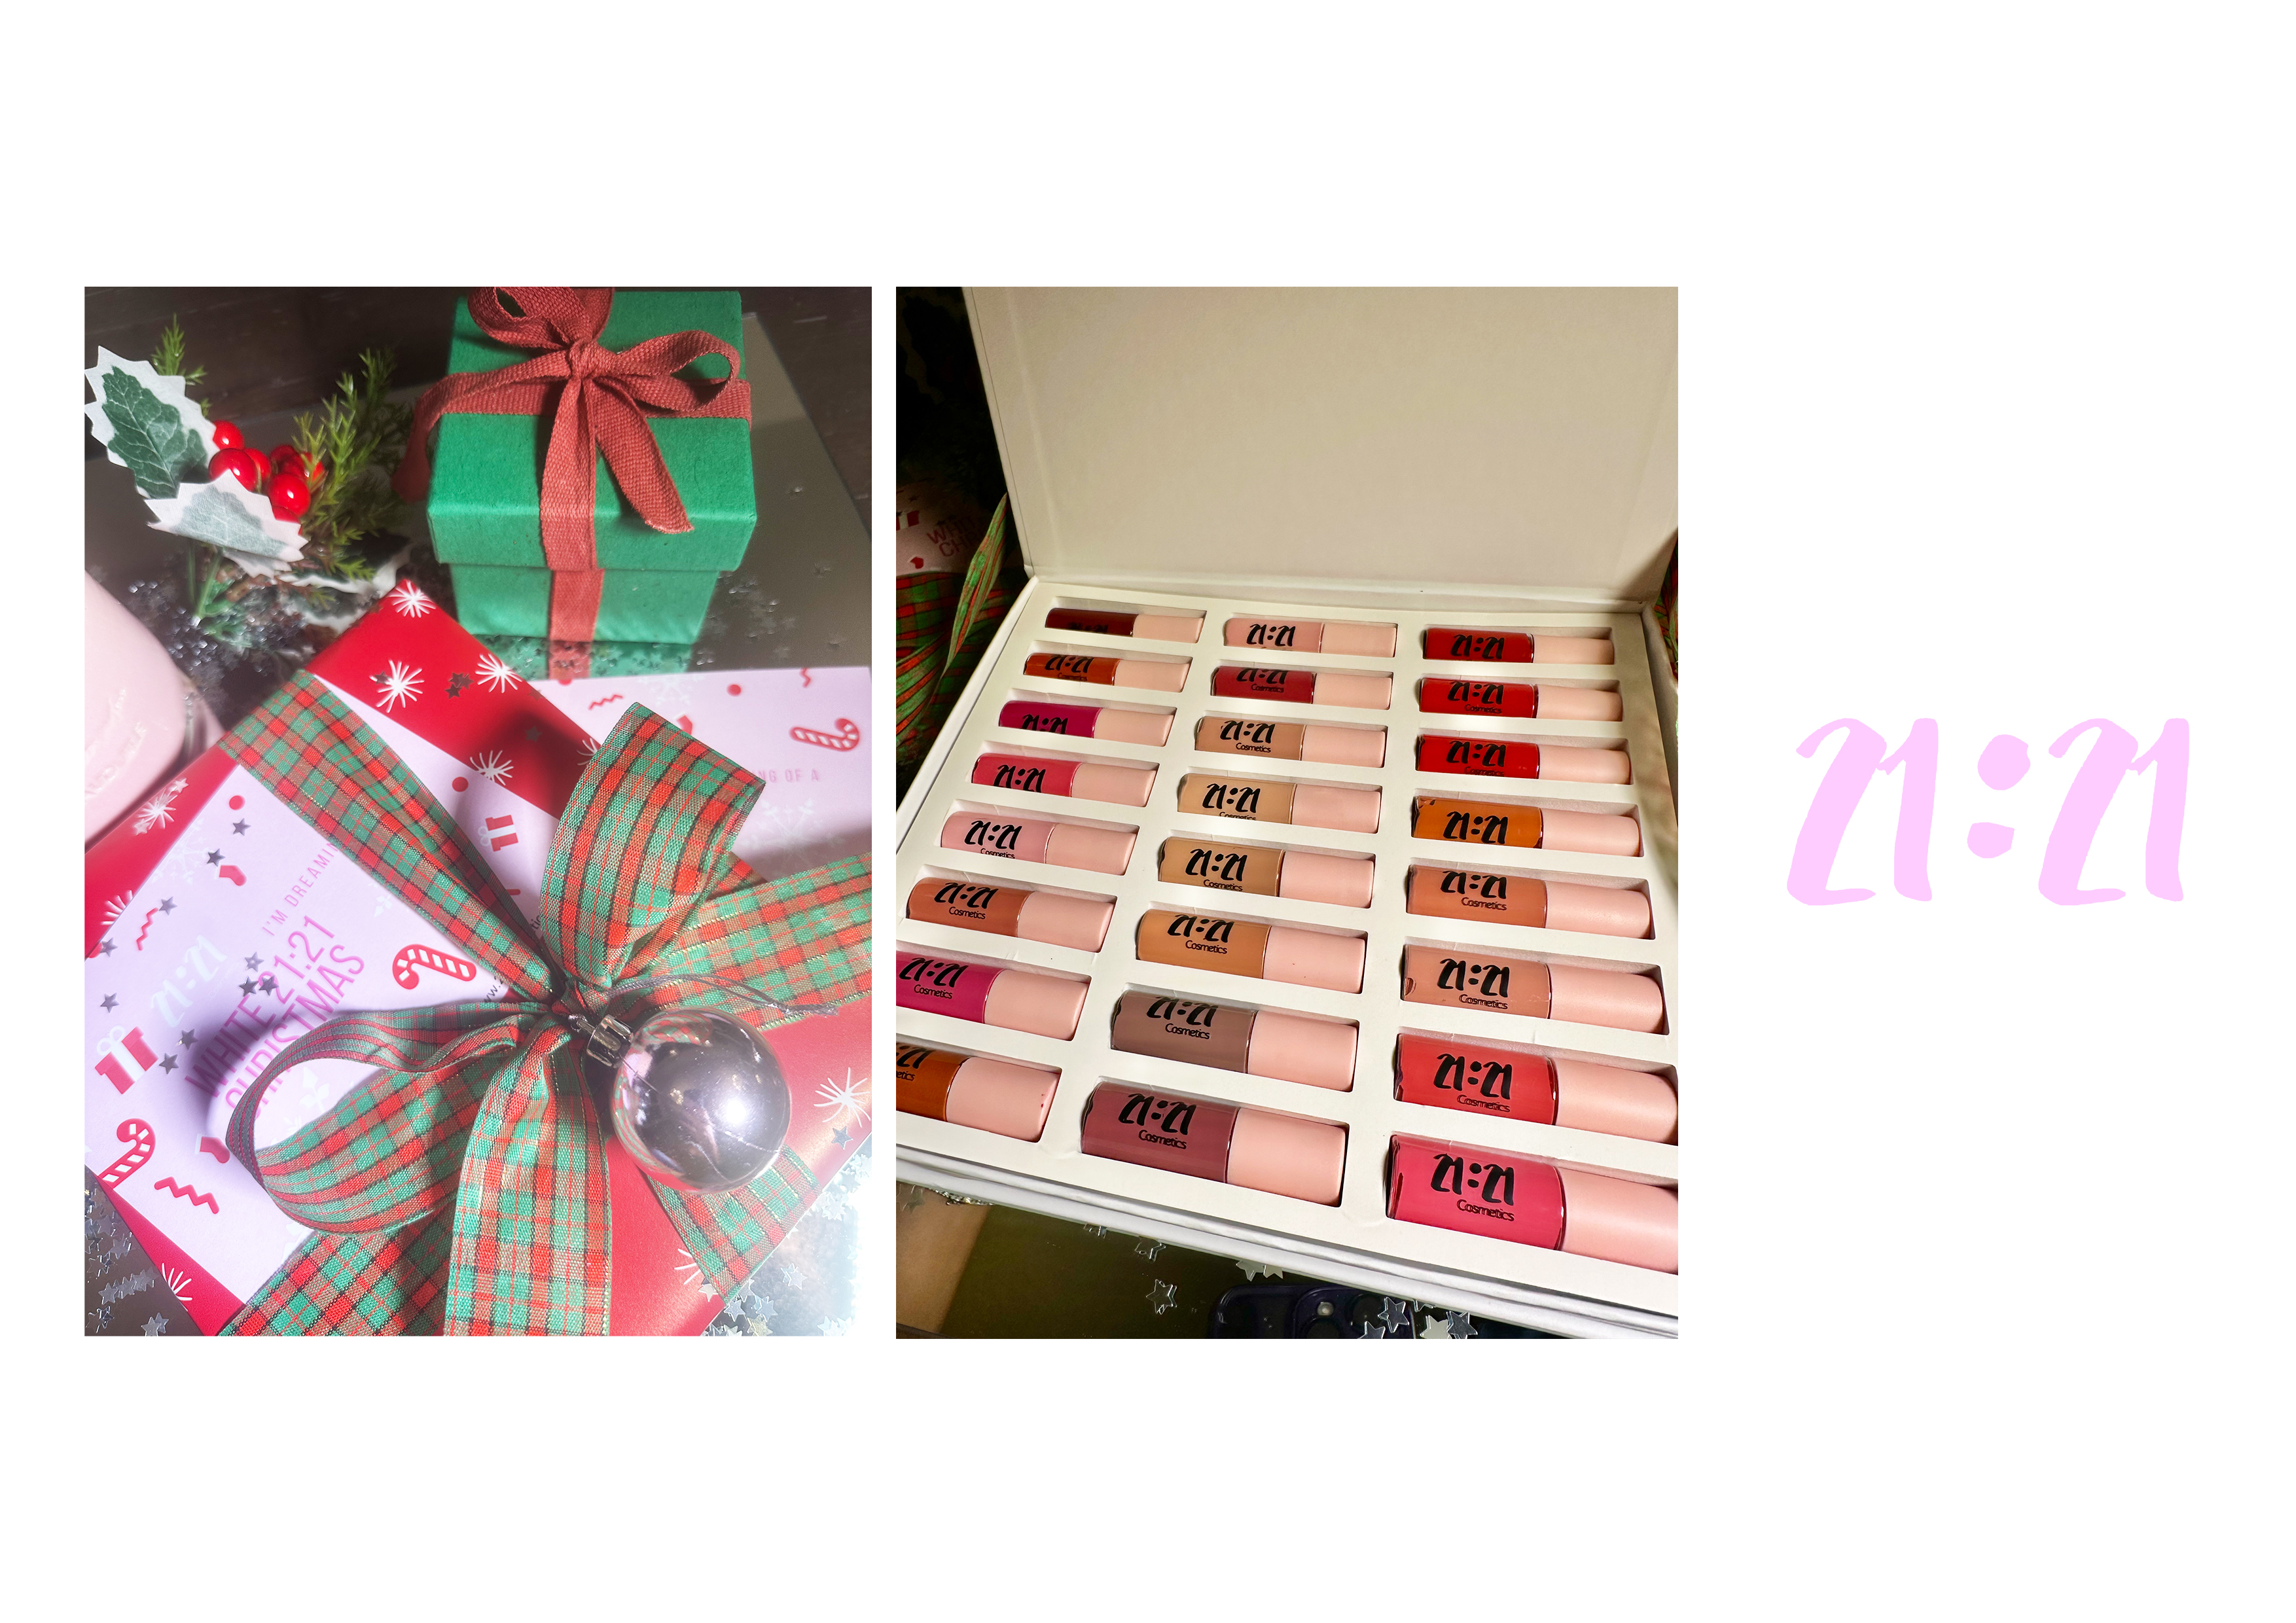 To HELLO! κάνει δώρο σε μια τυχερή ένα 21:21 lipstick kit με 25 lip-gloss